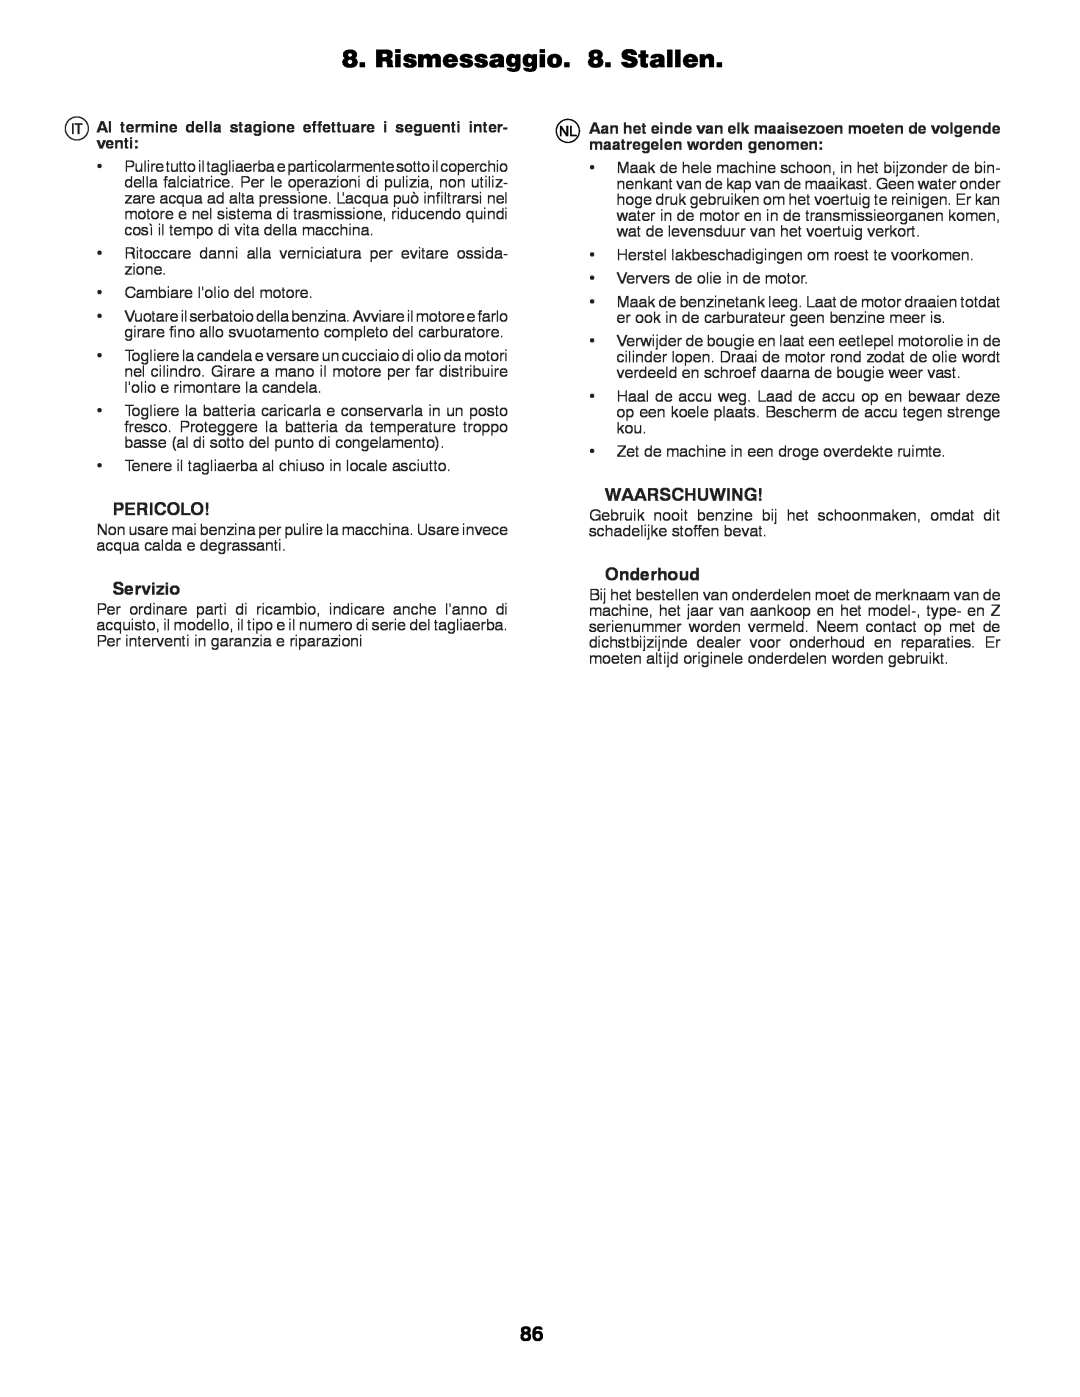 Partner Tech P200107HRB instruction manual Rismessaggio. 8. Stallen, Pericolo, Servizio, Waarschuwing, Onderhoud 